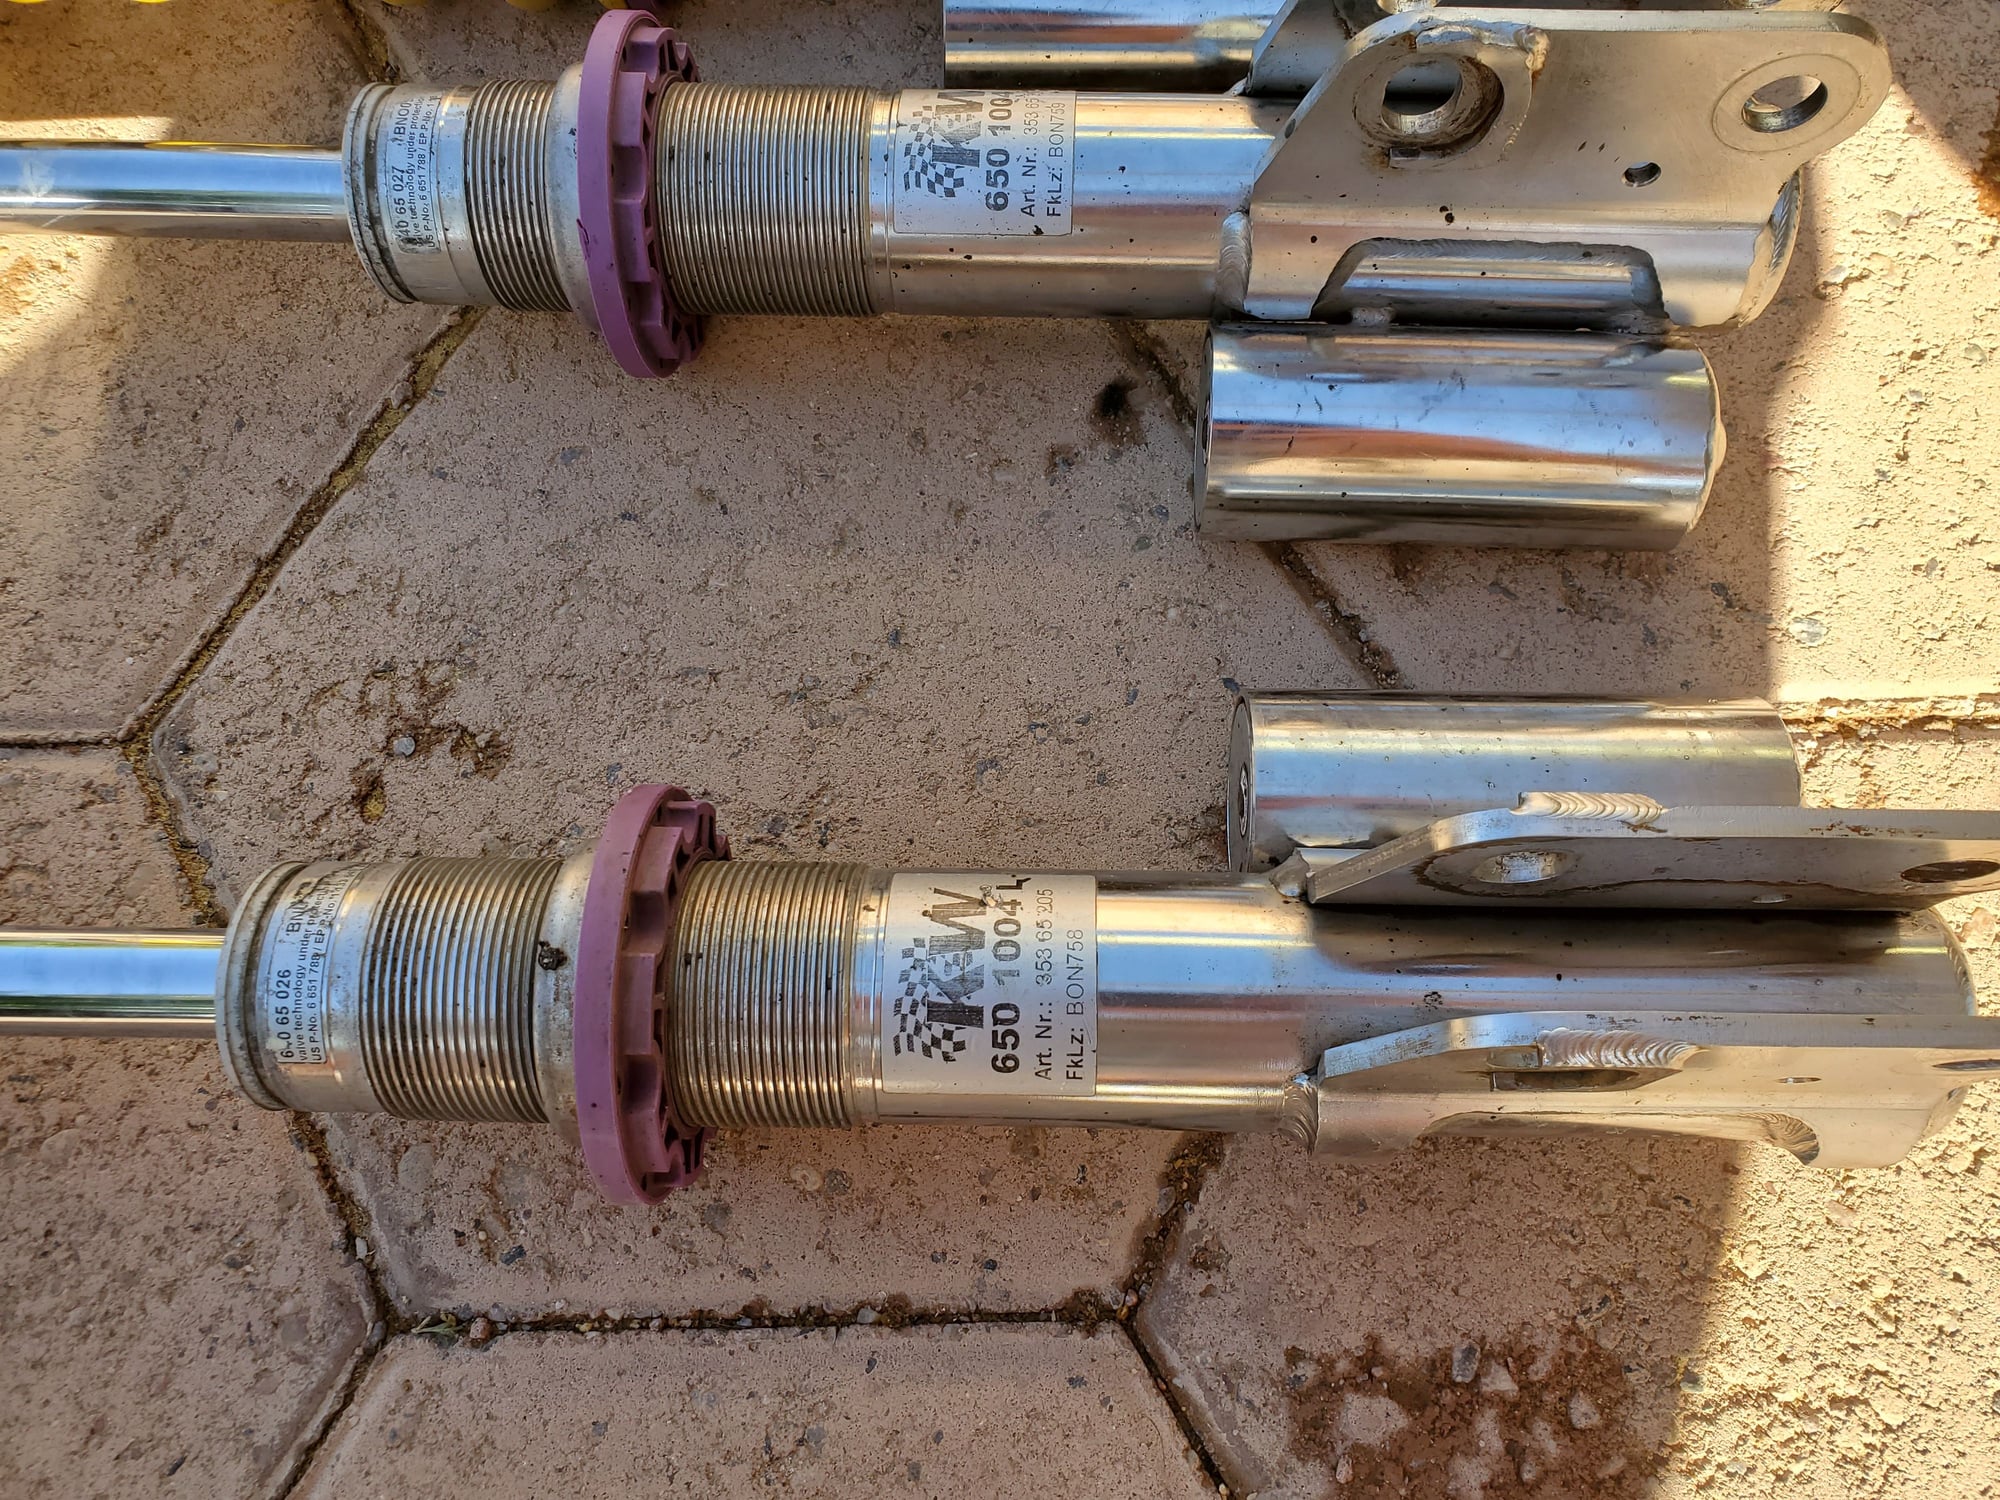 Steering/Suspension - Kw v3 coilovers ~18k miles - Used - Albuquerque, NM 87109, United States